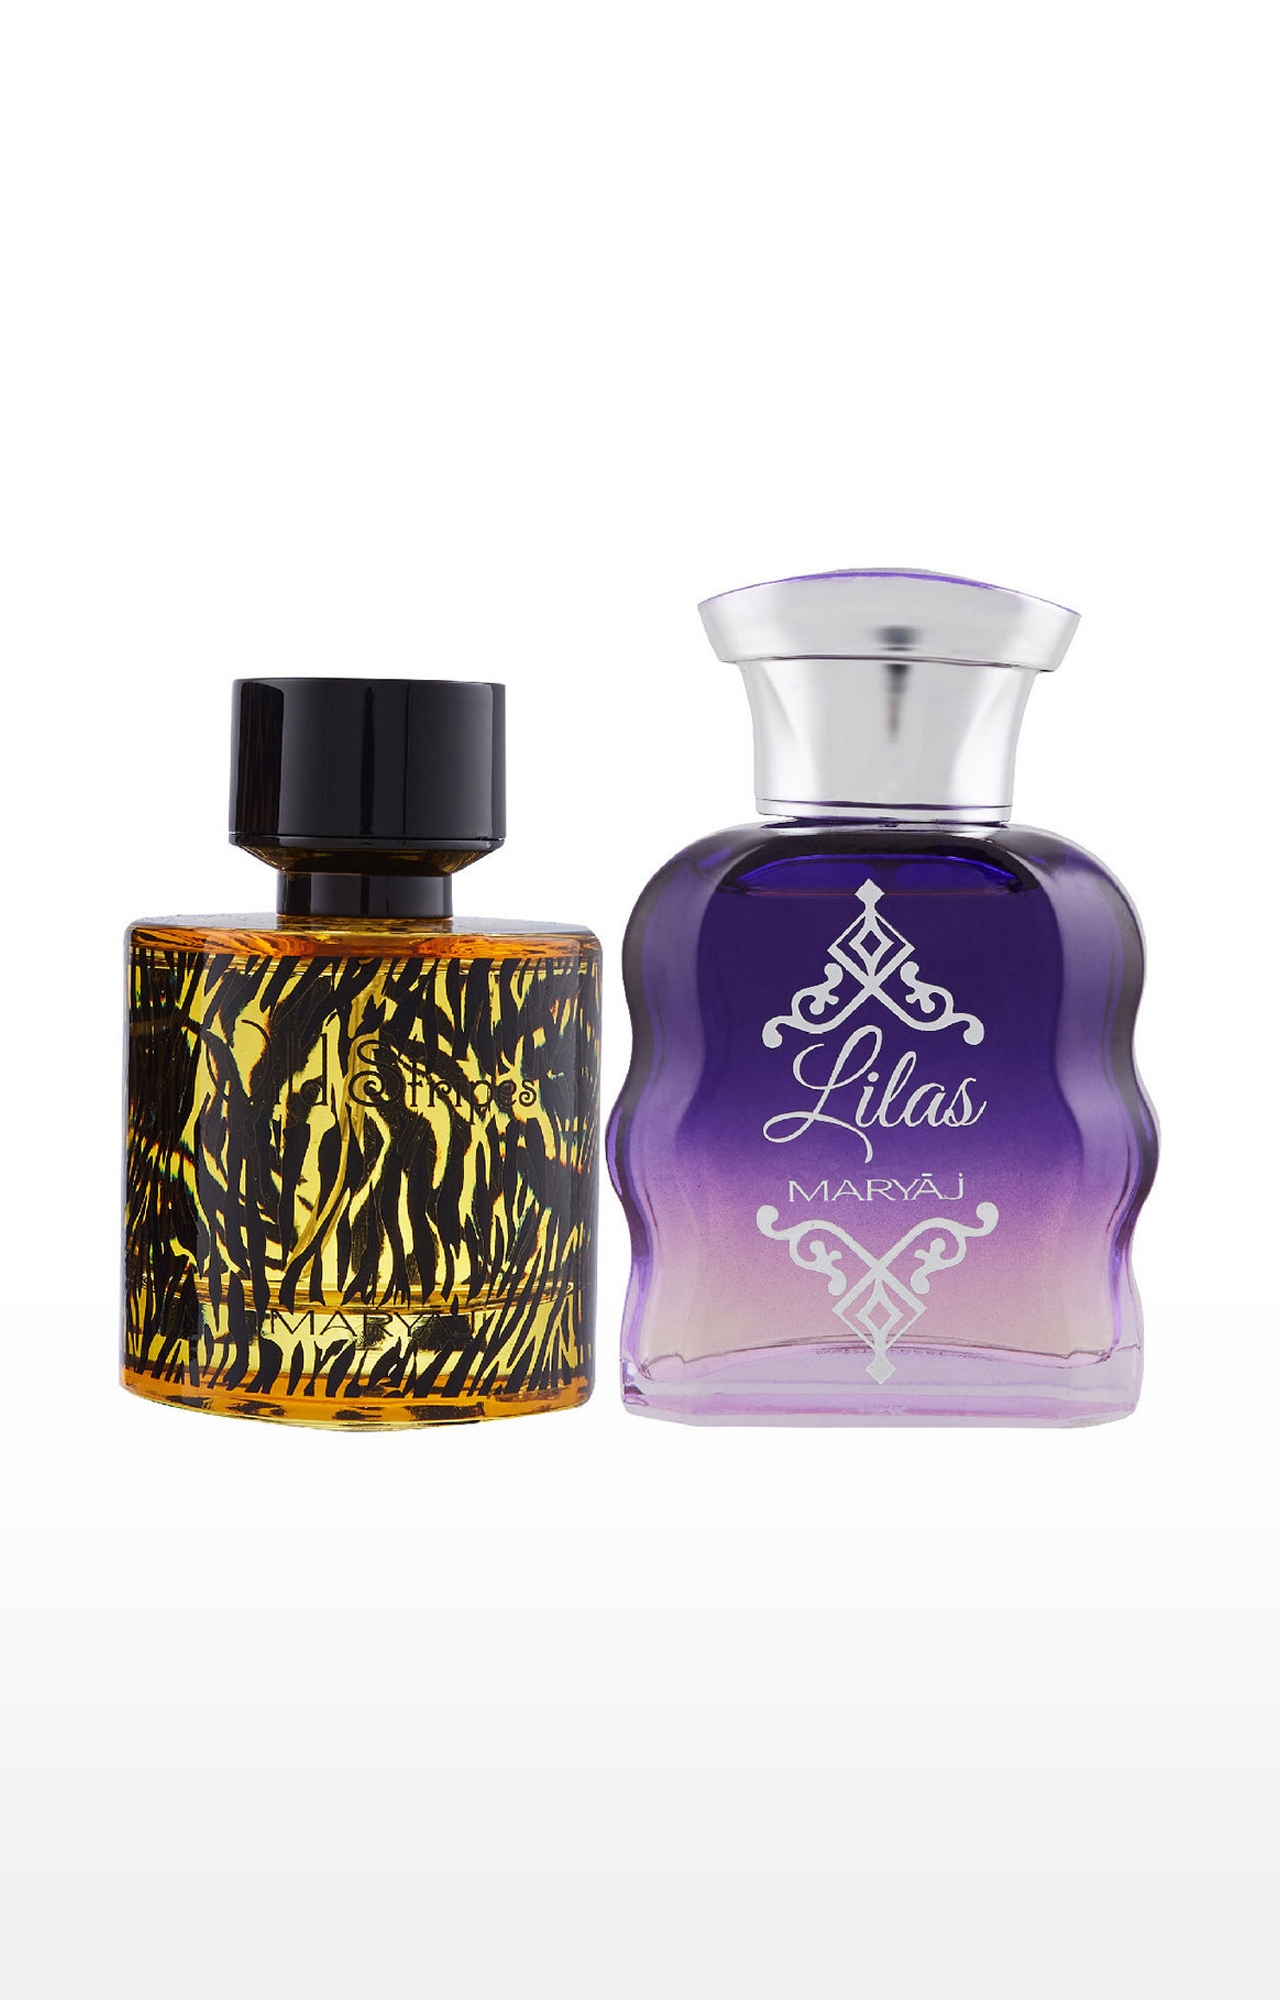 Maryaj Wild Stripes Eau De Parfum Oriental Perfume 100ml for Men and Maryaj Lilas Eau De Parfum Perfume 100ml for Women